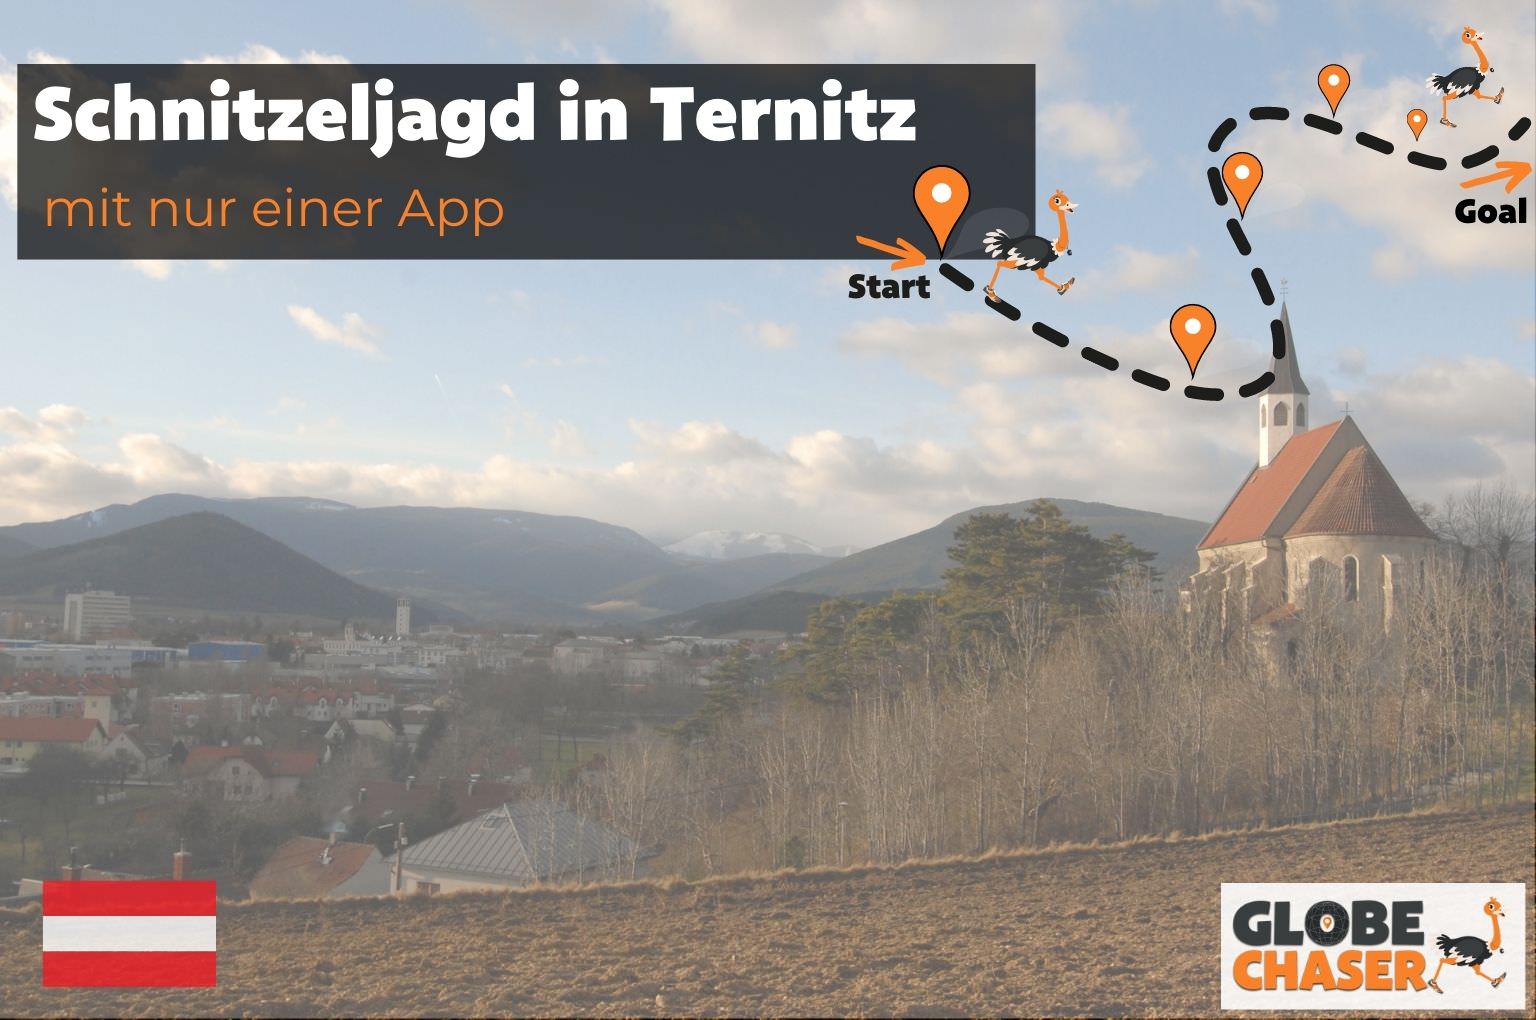 Schnitzeljagd in Ternitz mit App - Globe Chaser Erlebnisse Austria